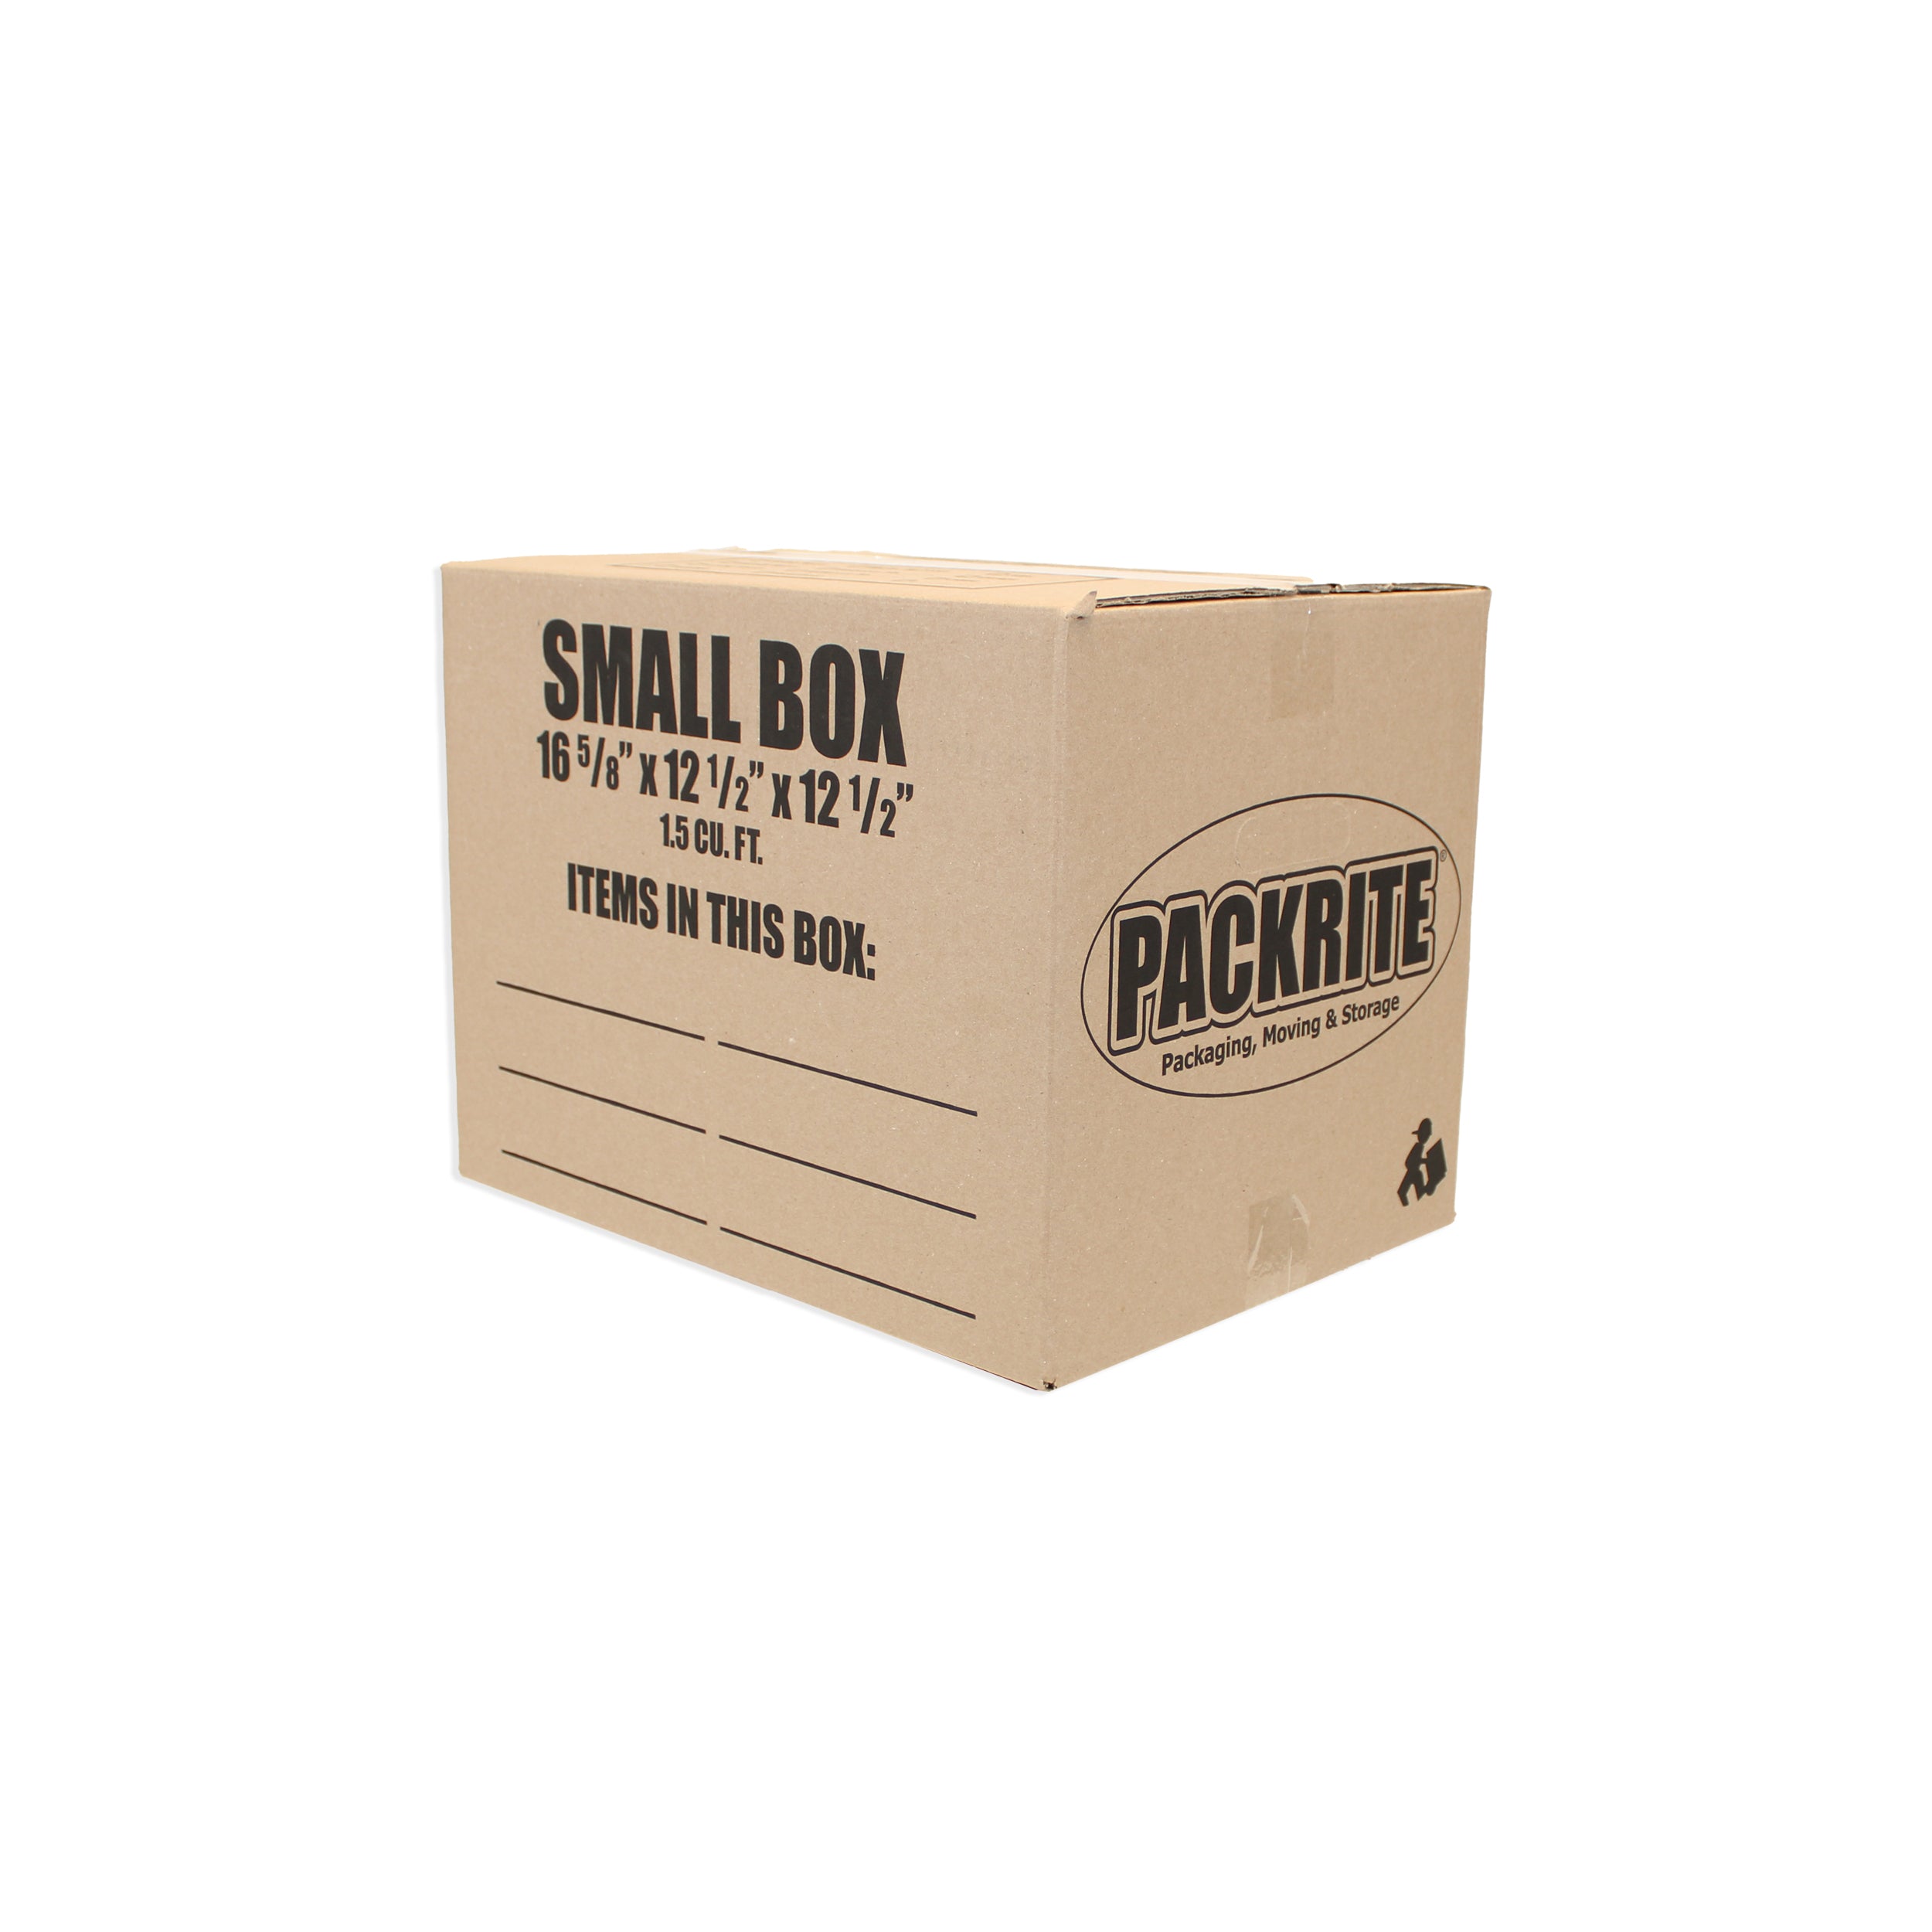 Small Moving Boxes at